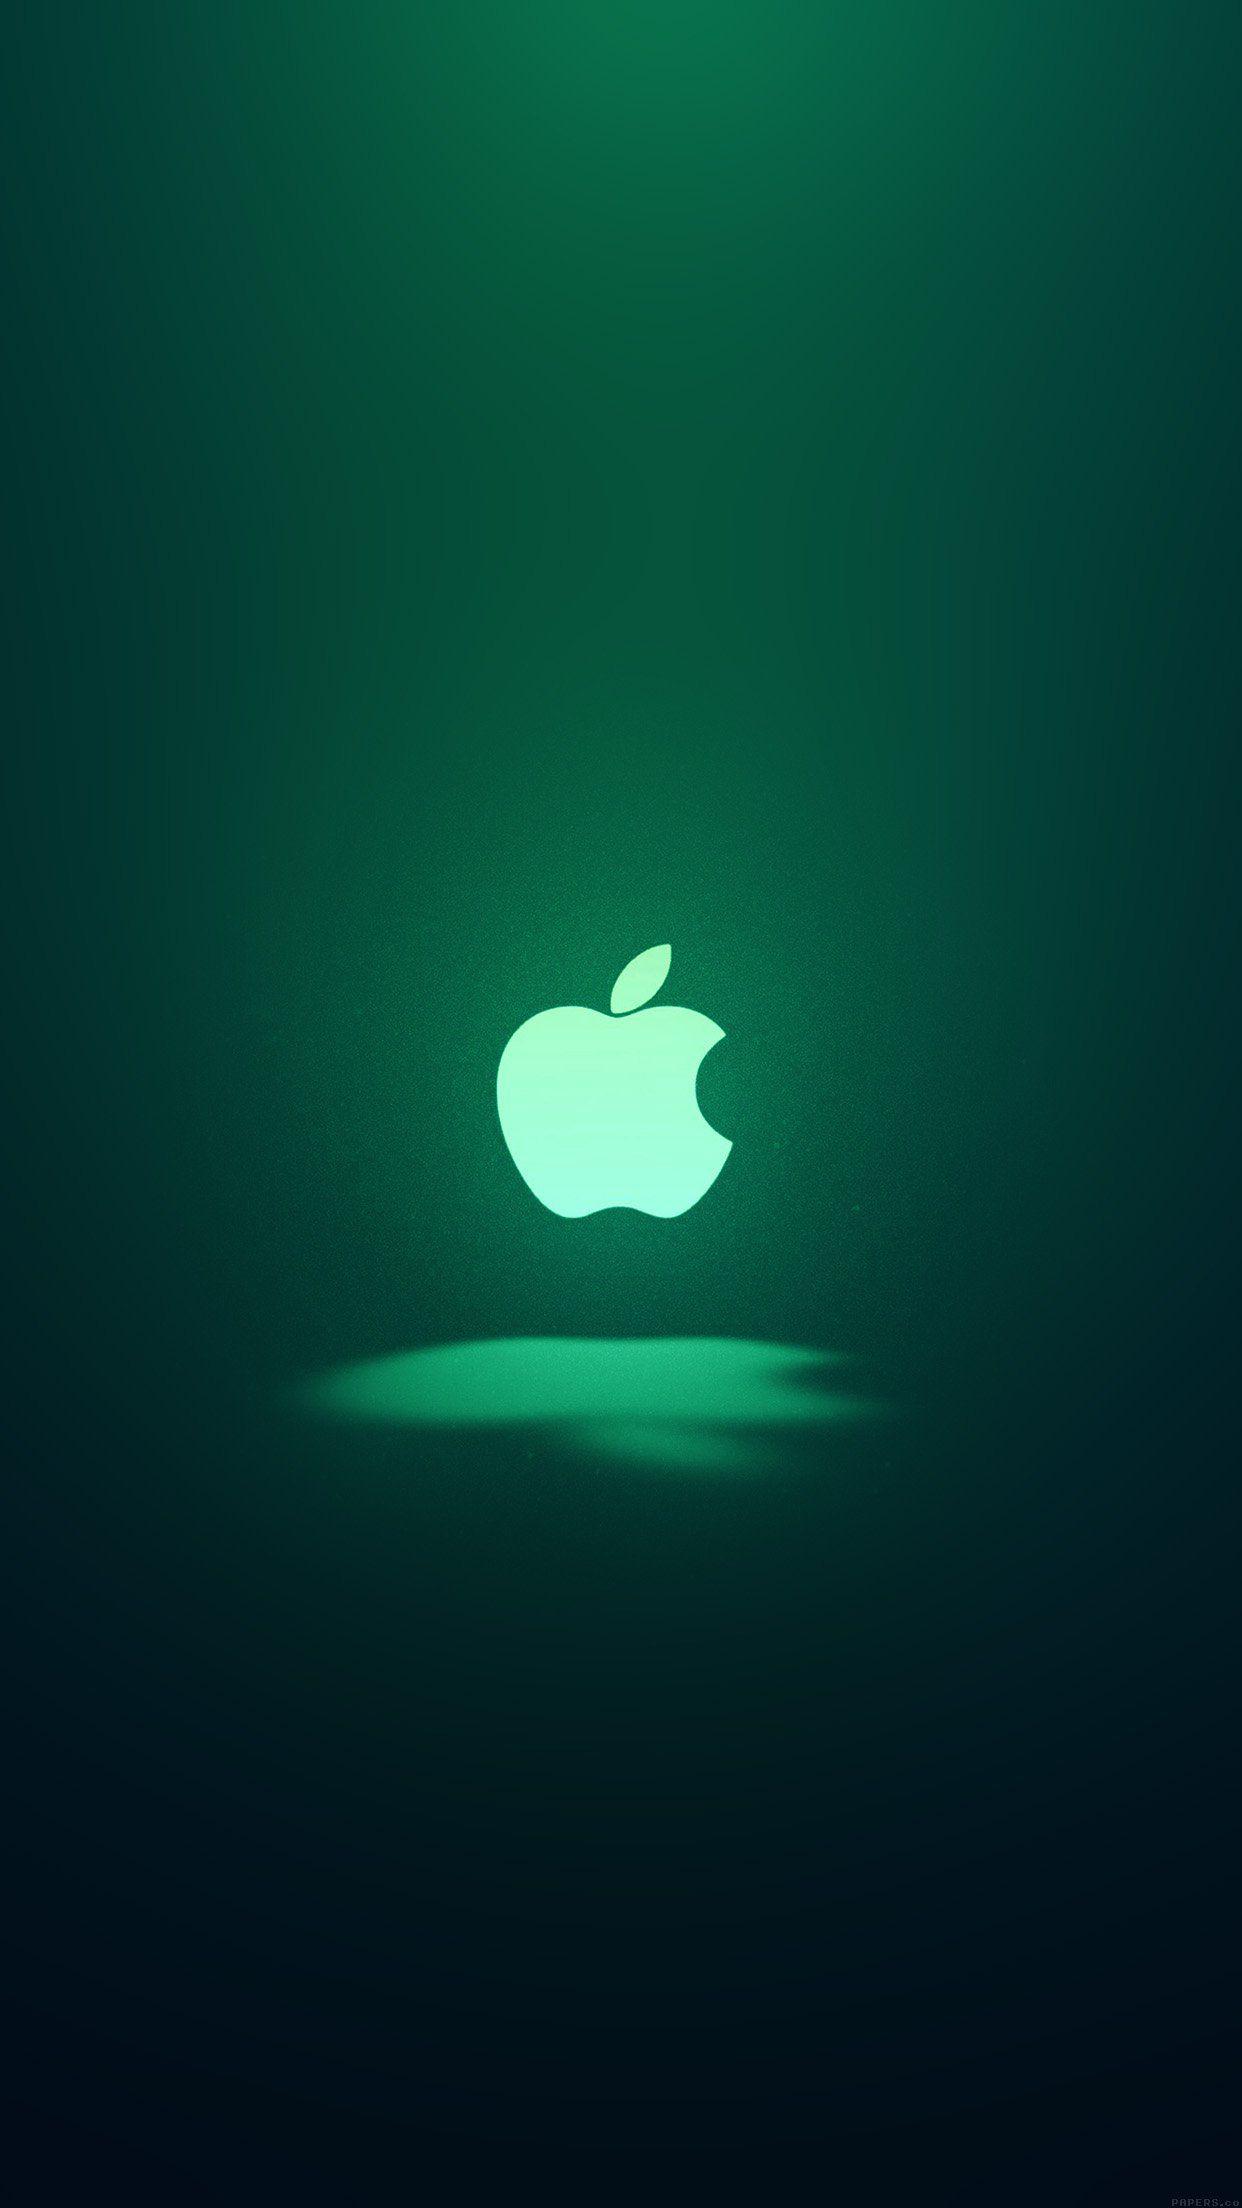 Apple Logo Love Mania Green Android wallpaper HD